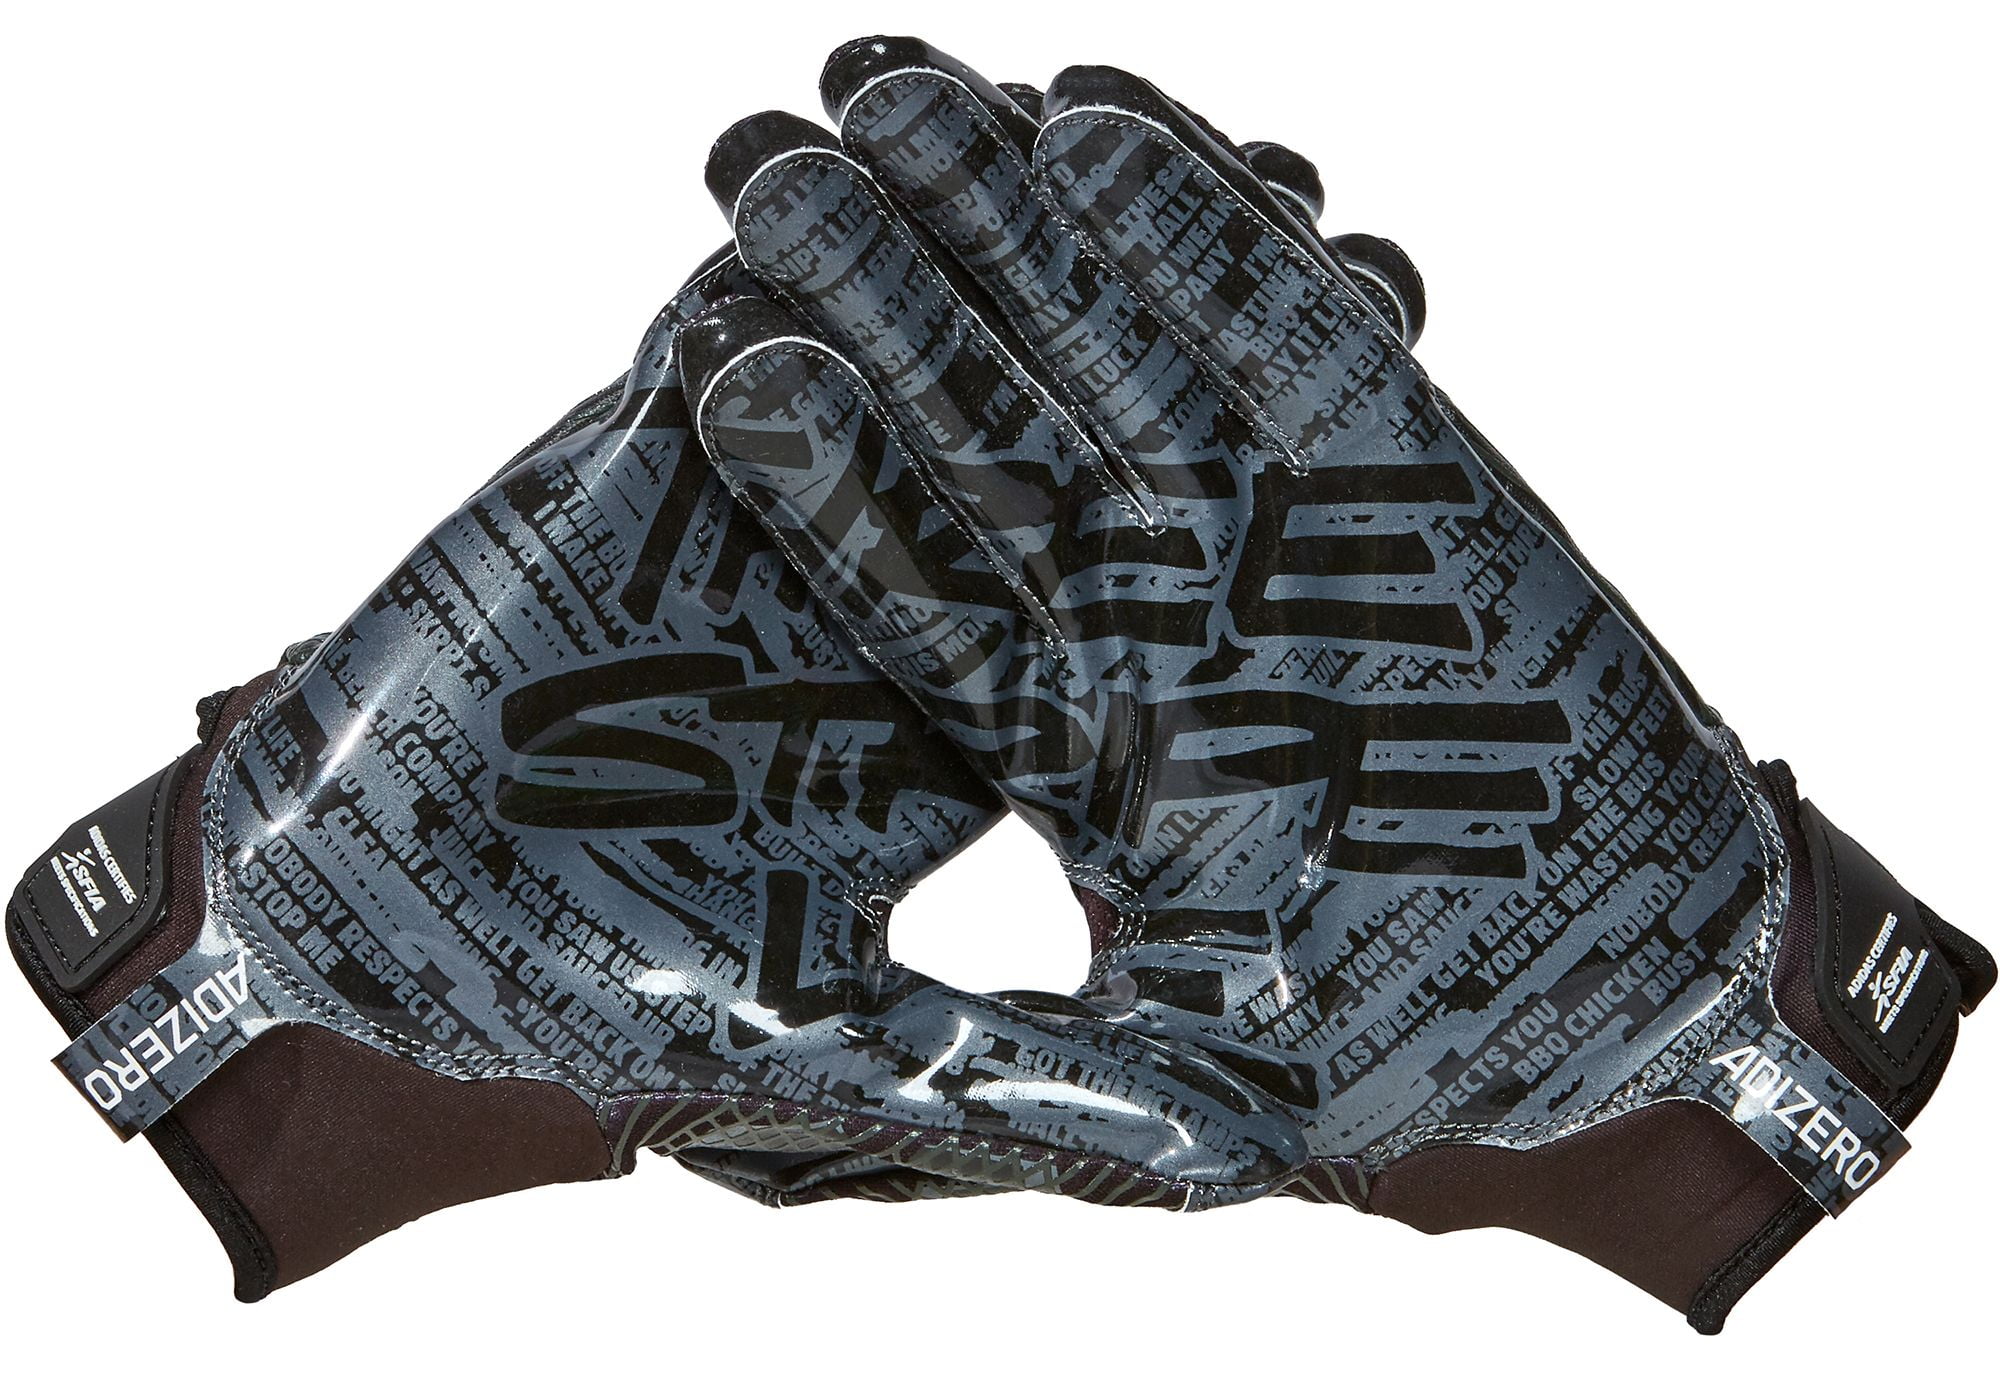 adidas 5 star 8.0 gloves